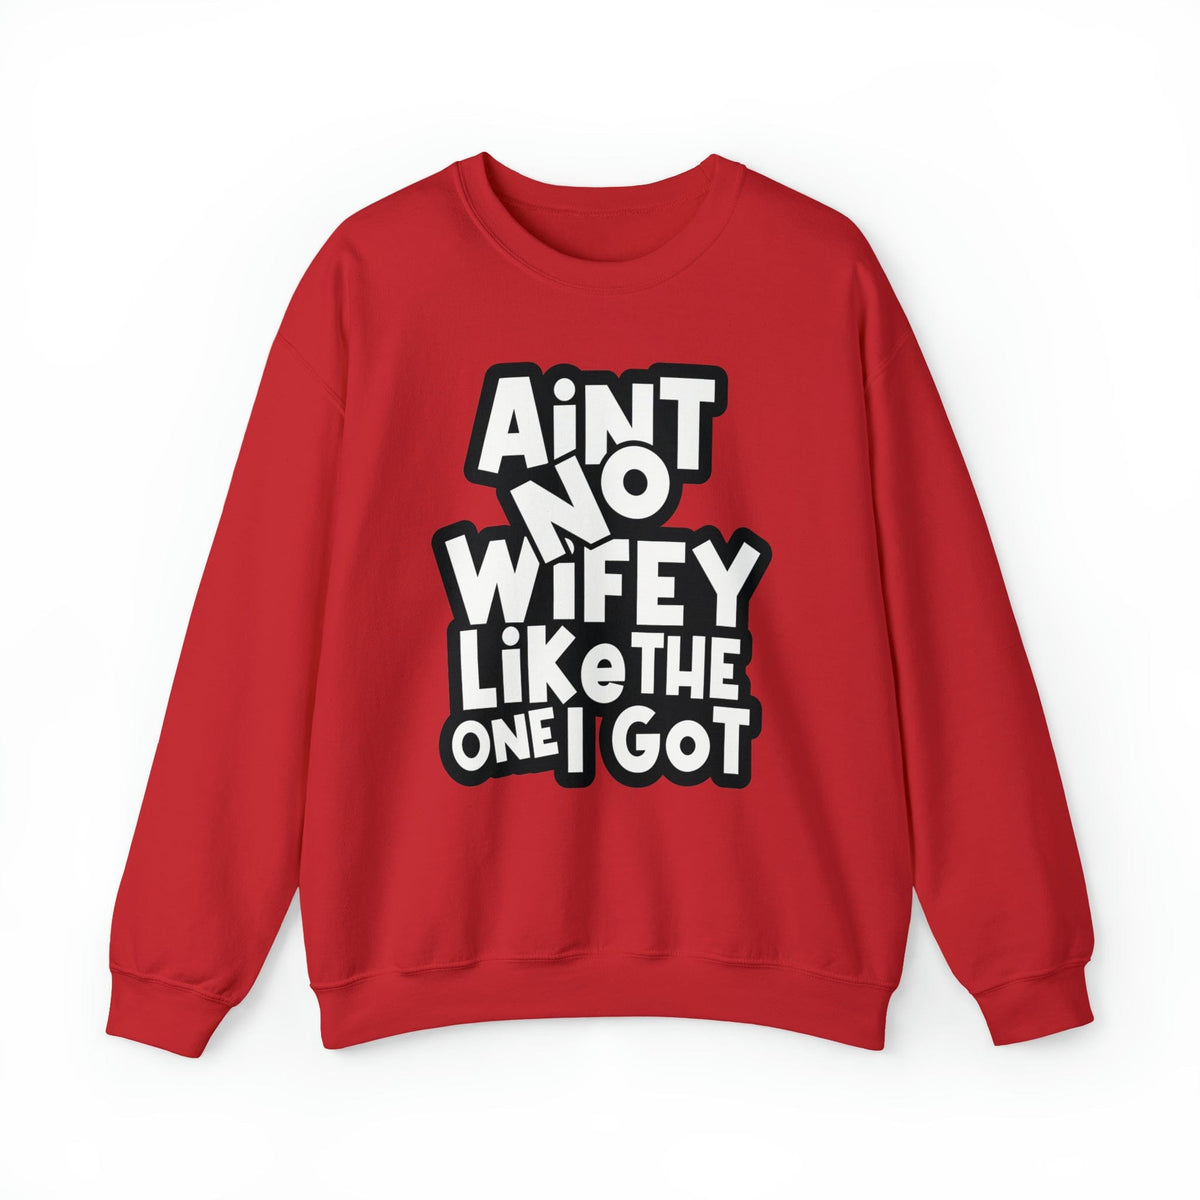 Aint no Wifey like the one I got Sweatshirt